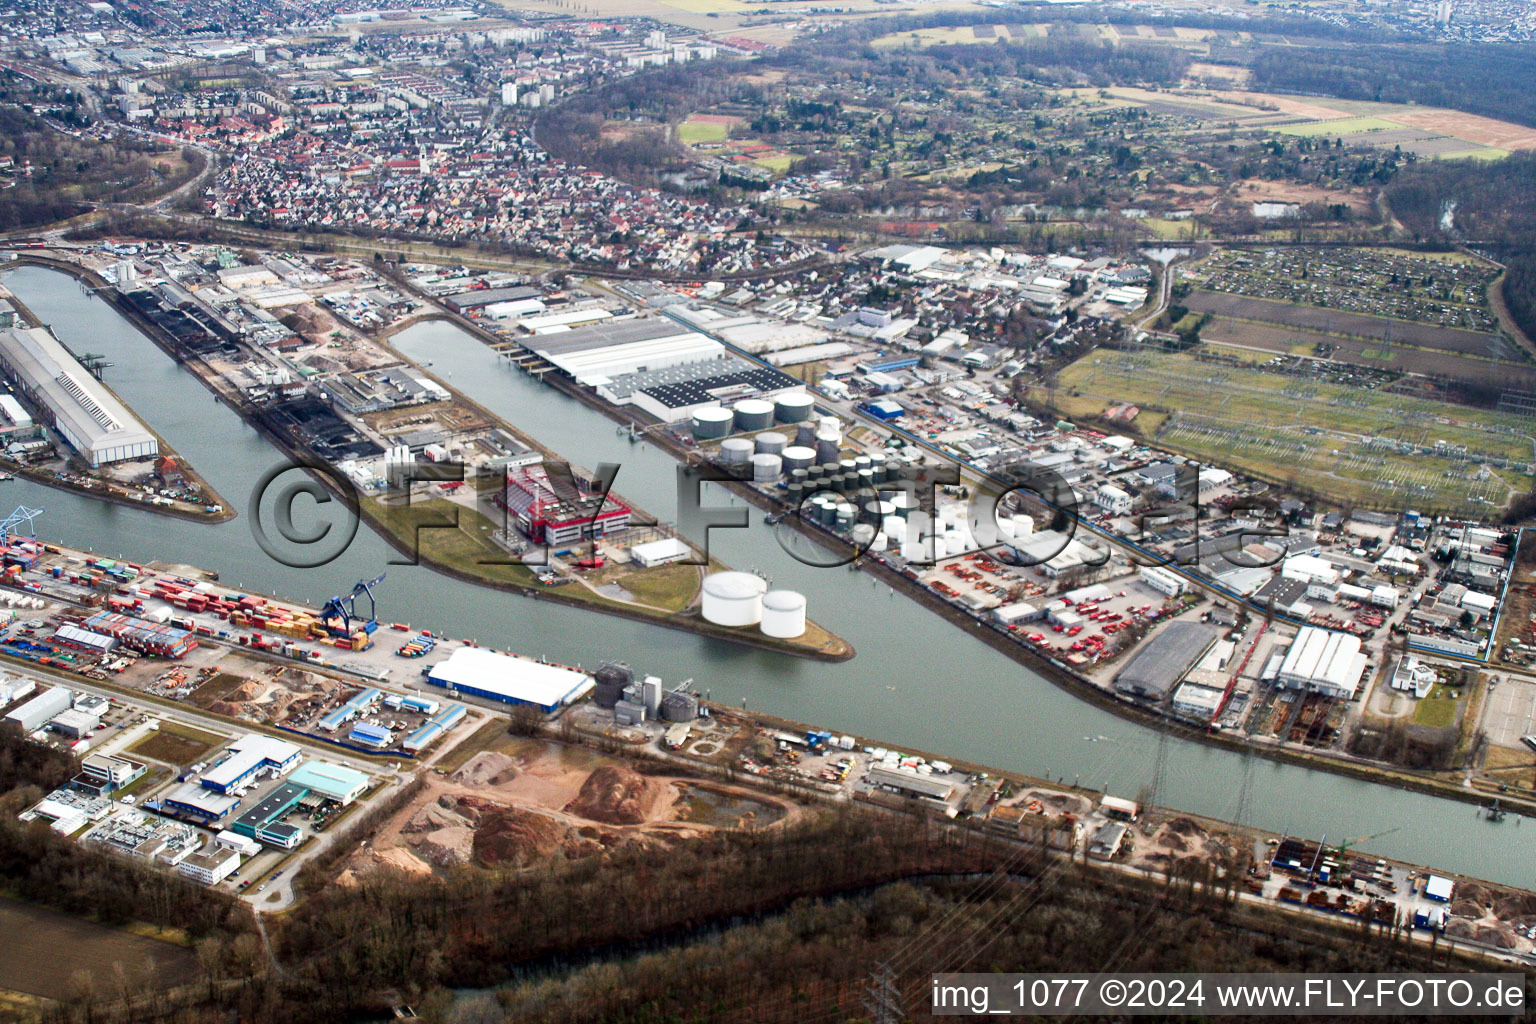 Drone image of District Rheinhafen in Karlsruhe in the state Baden-Wuerttemberg, Germany